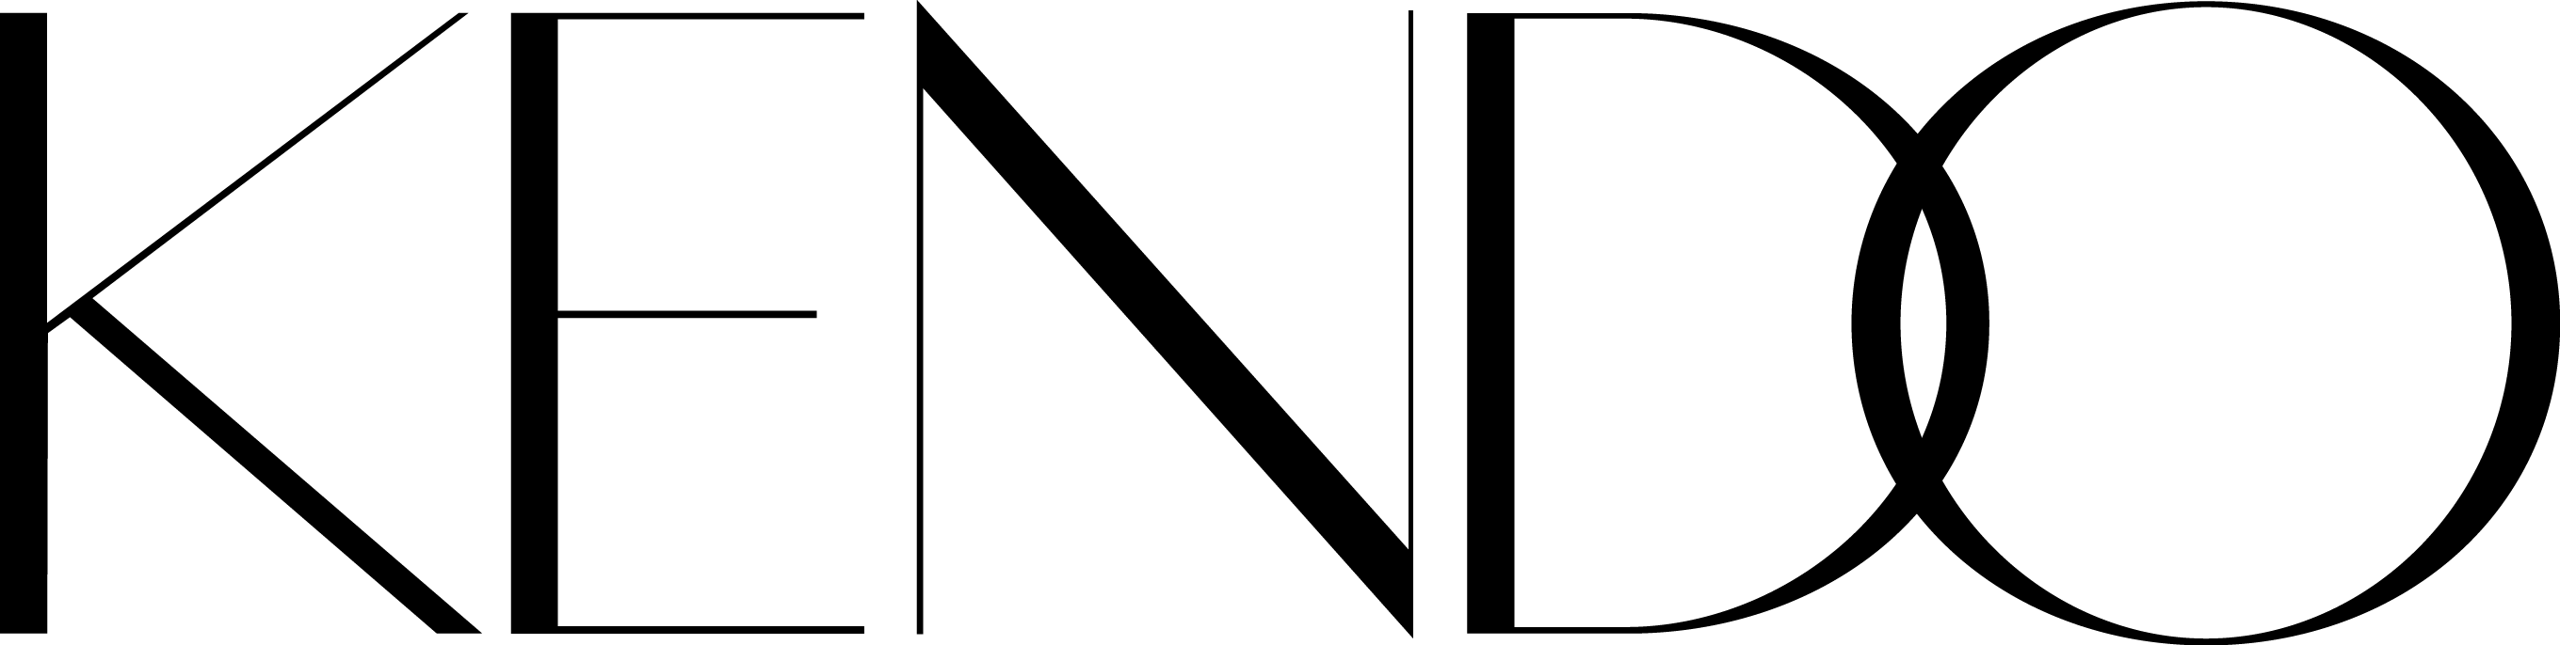 Kendo logo